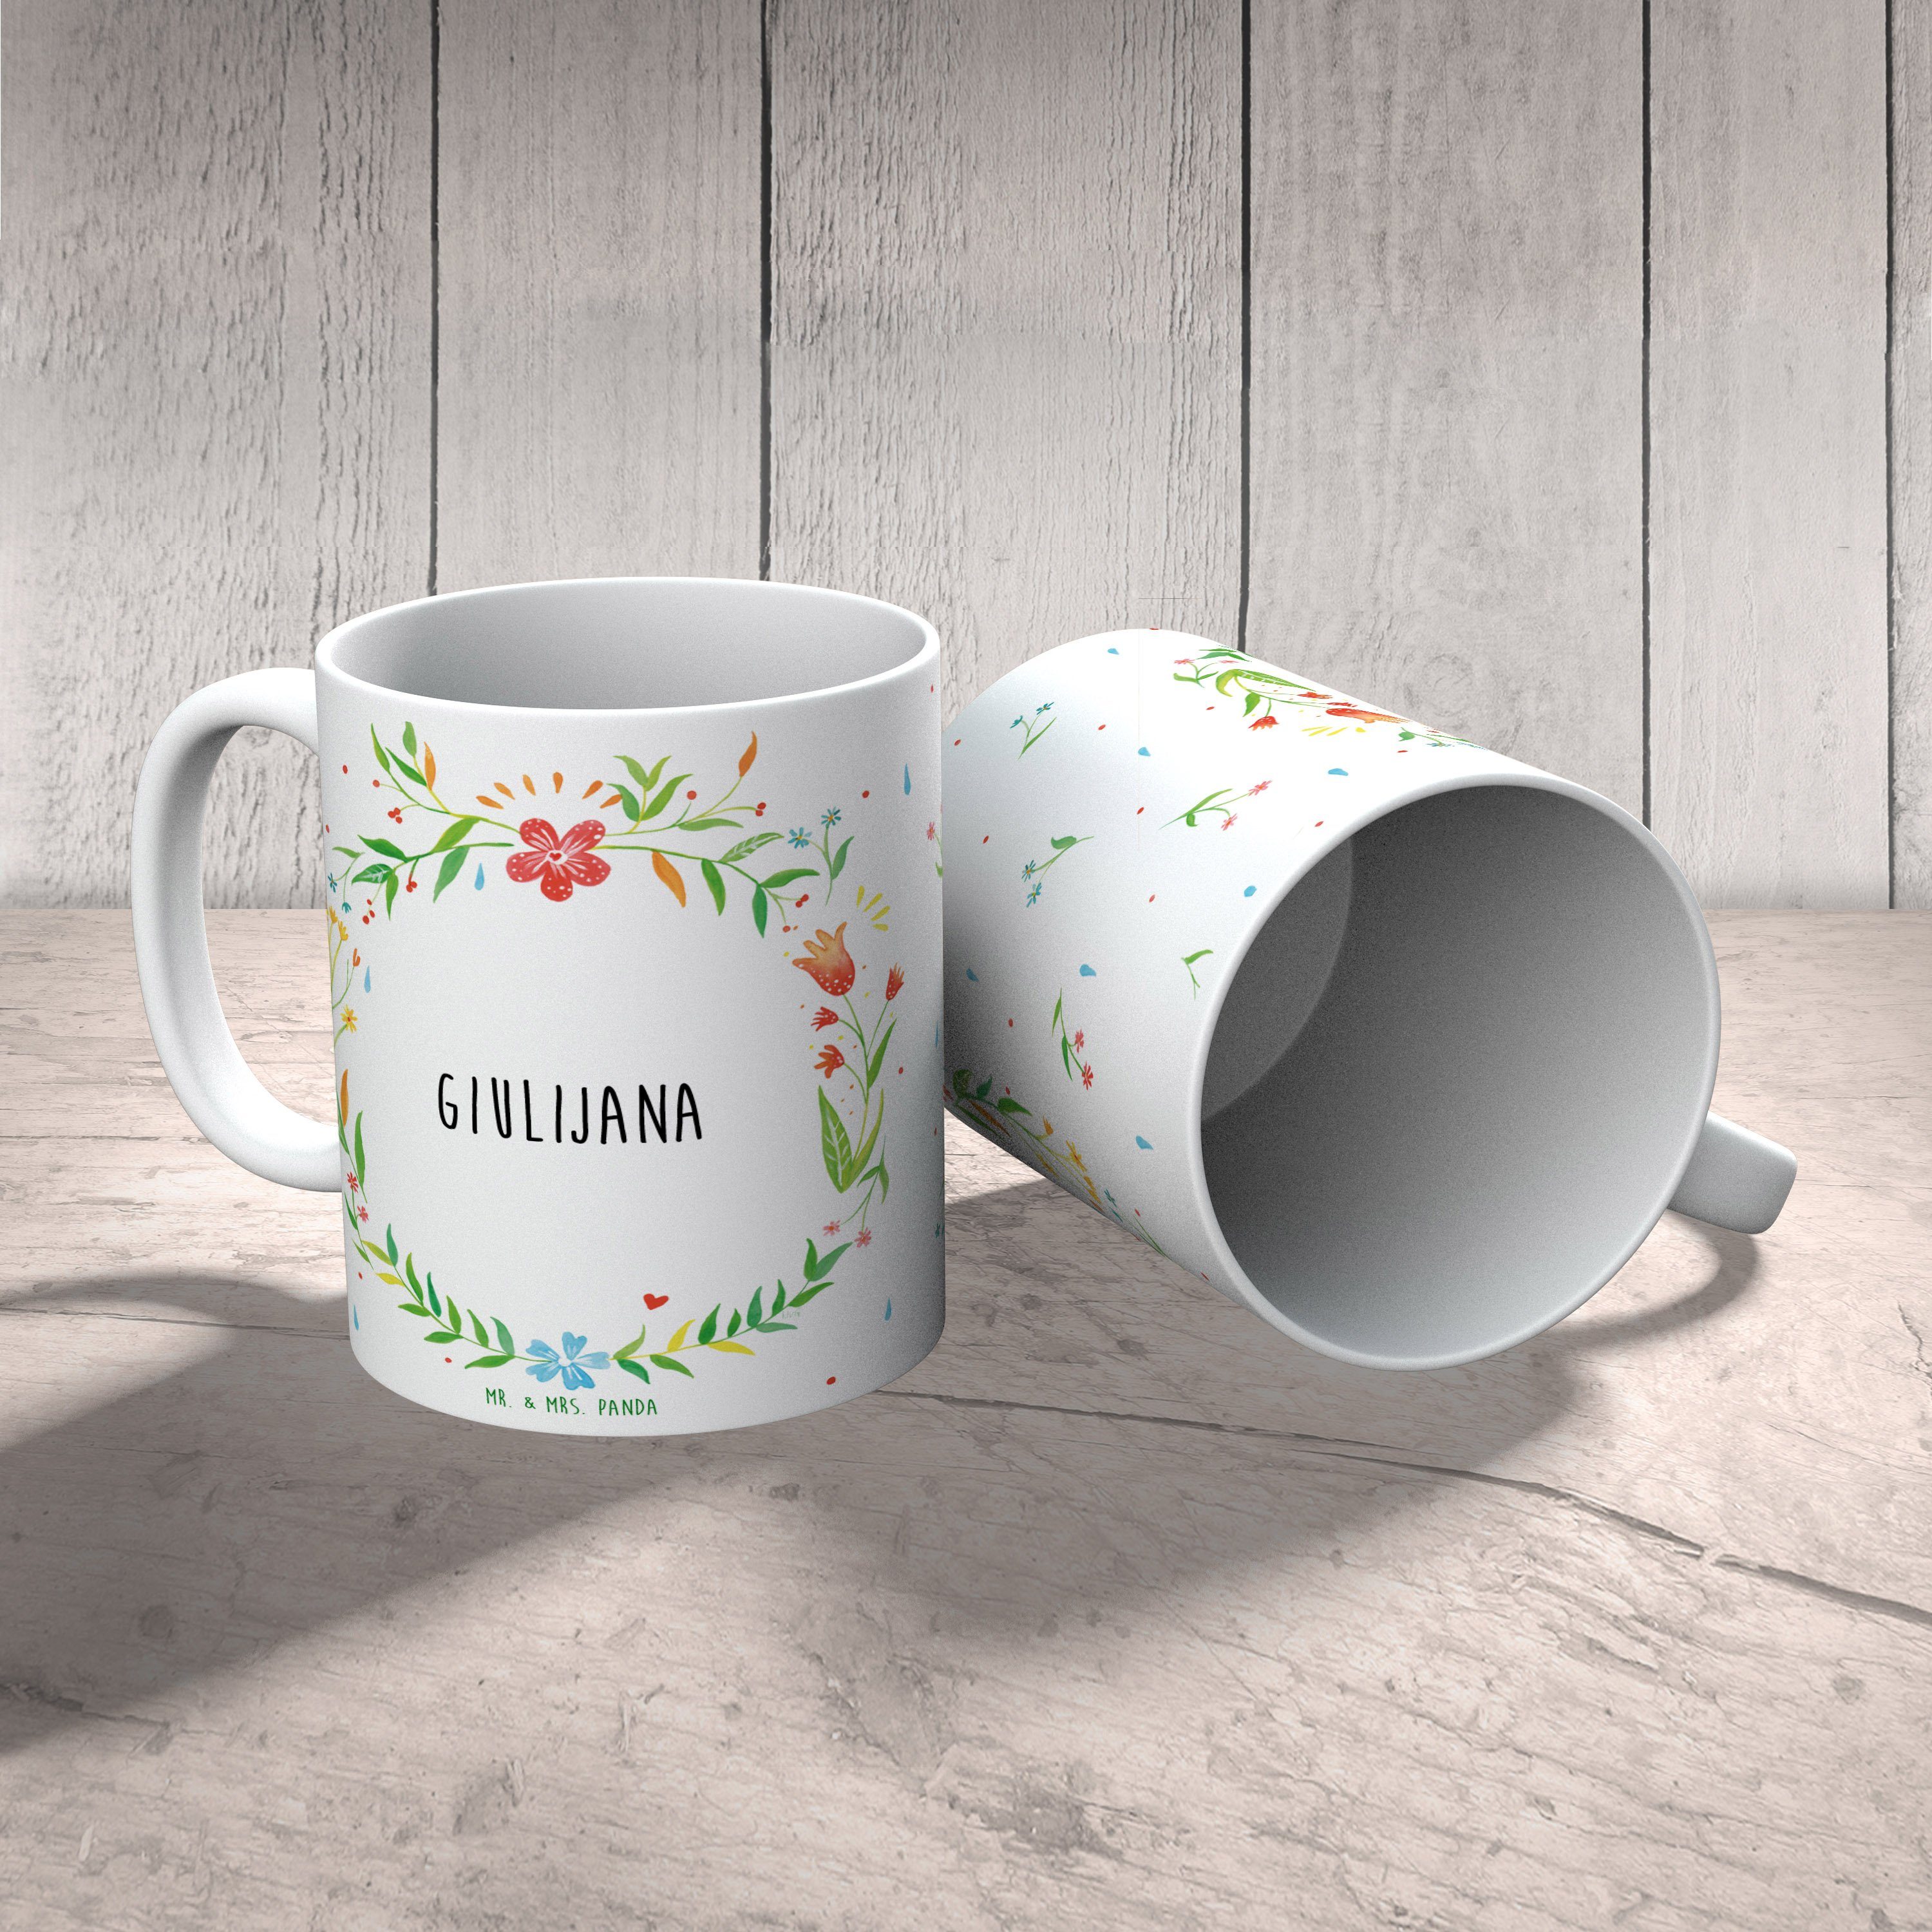 Mr. & Mrs. Panda Giulijana Tasse Kaffeebecher, Keramik Geschenk, - Büro Tasse, Tasse Motive, Tasse